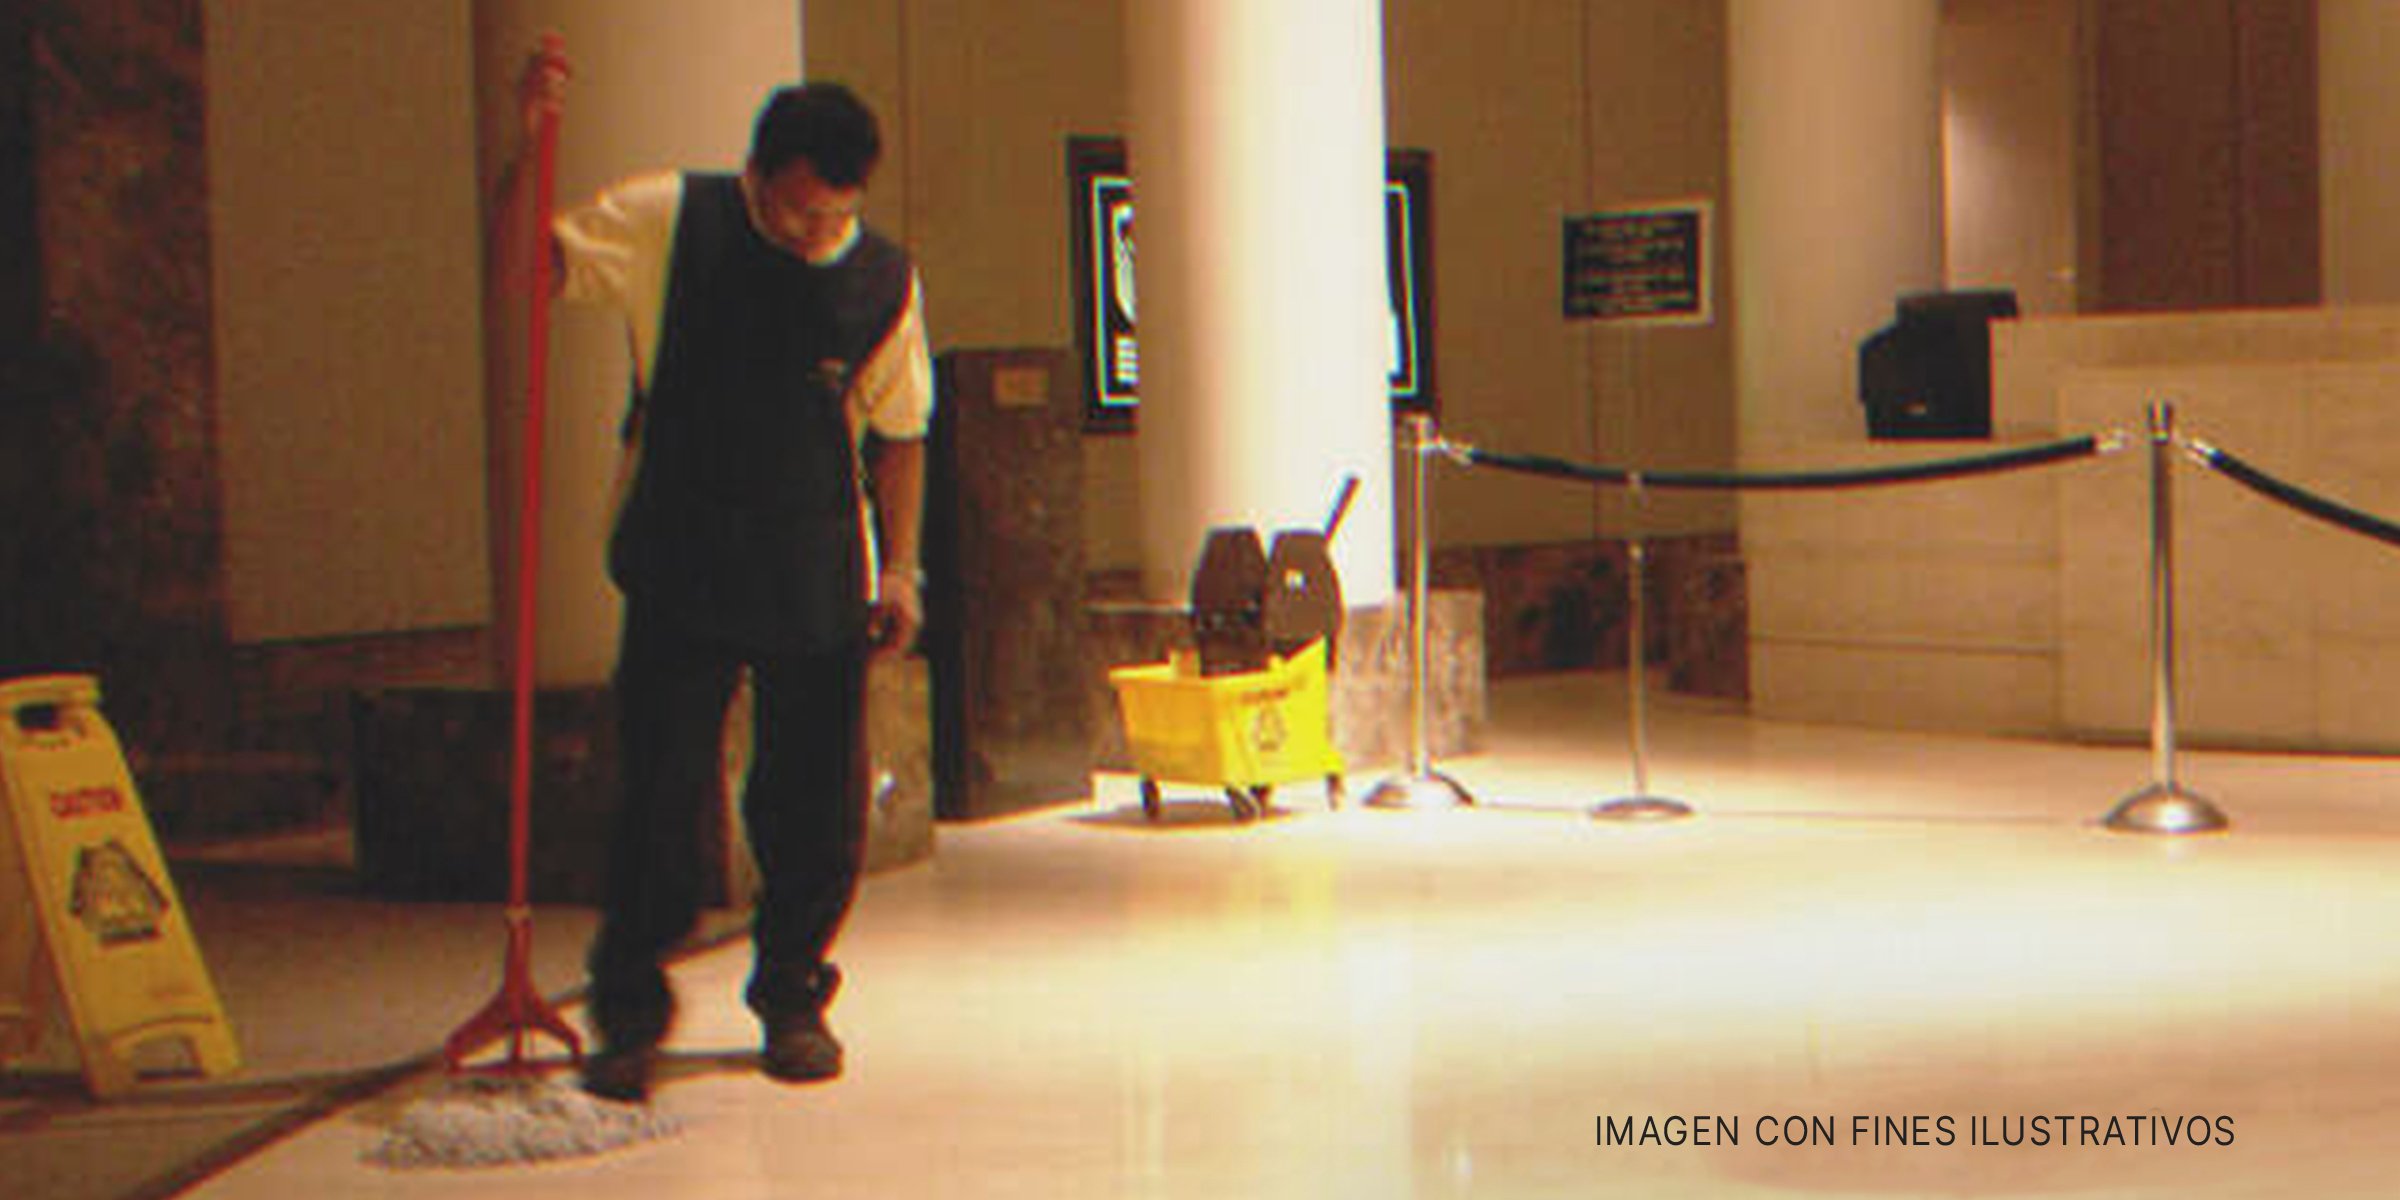 Un conserje limpiando el piso. | Source: flickr.com/Daquella manera (Public Domain)